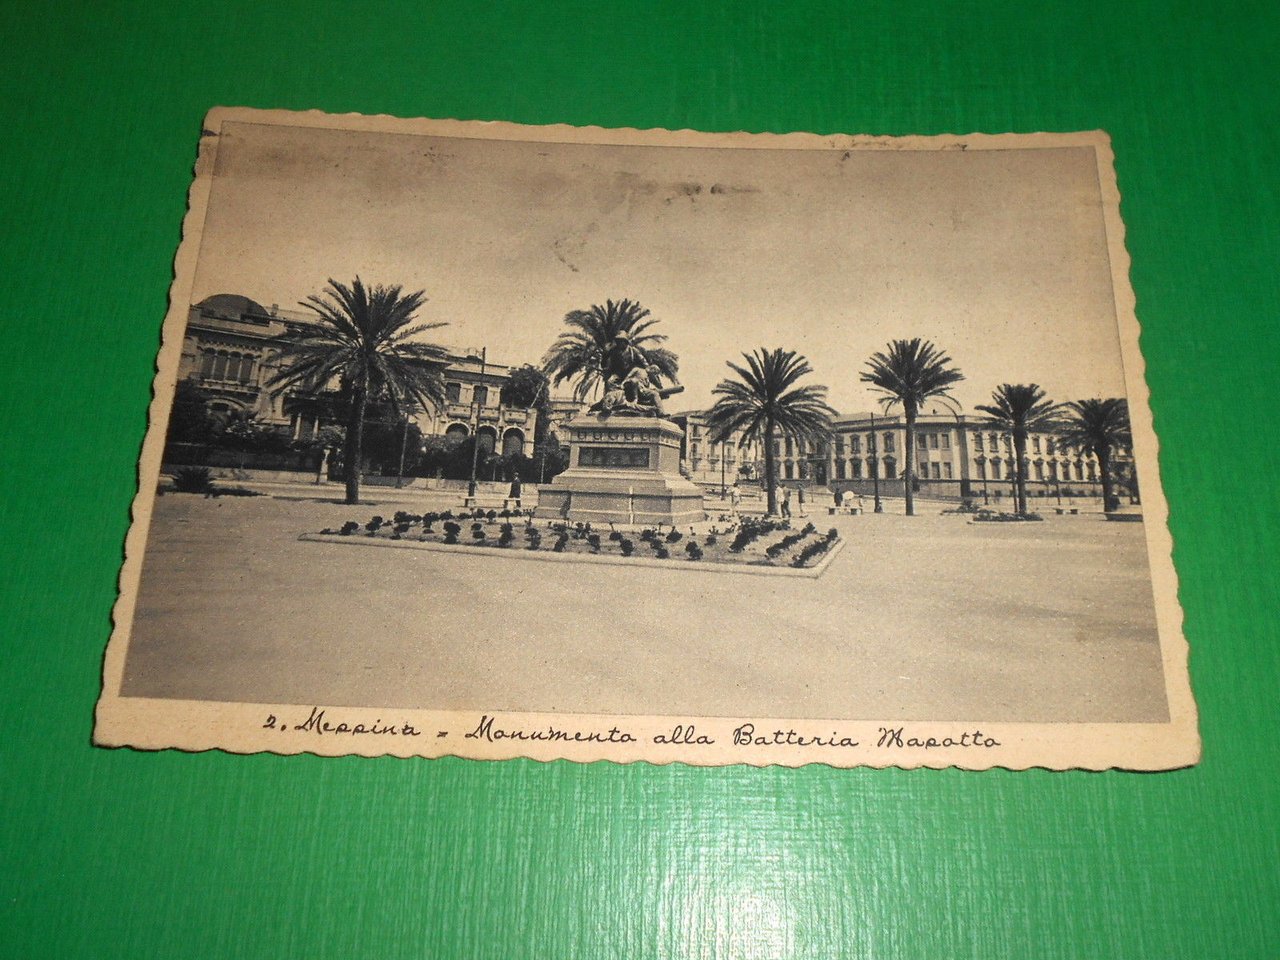 Cartolina Messina - Monumento alla Batteria Masotto 1941.